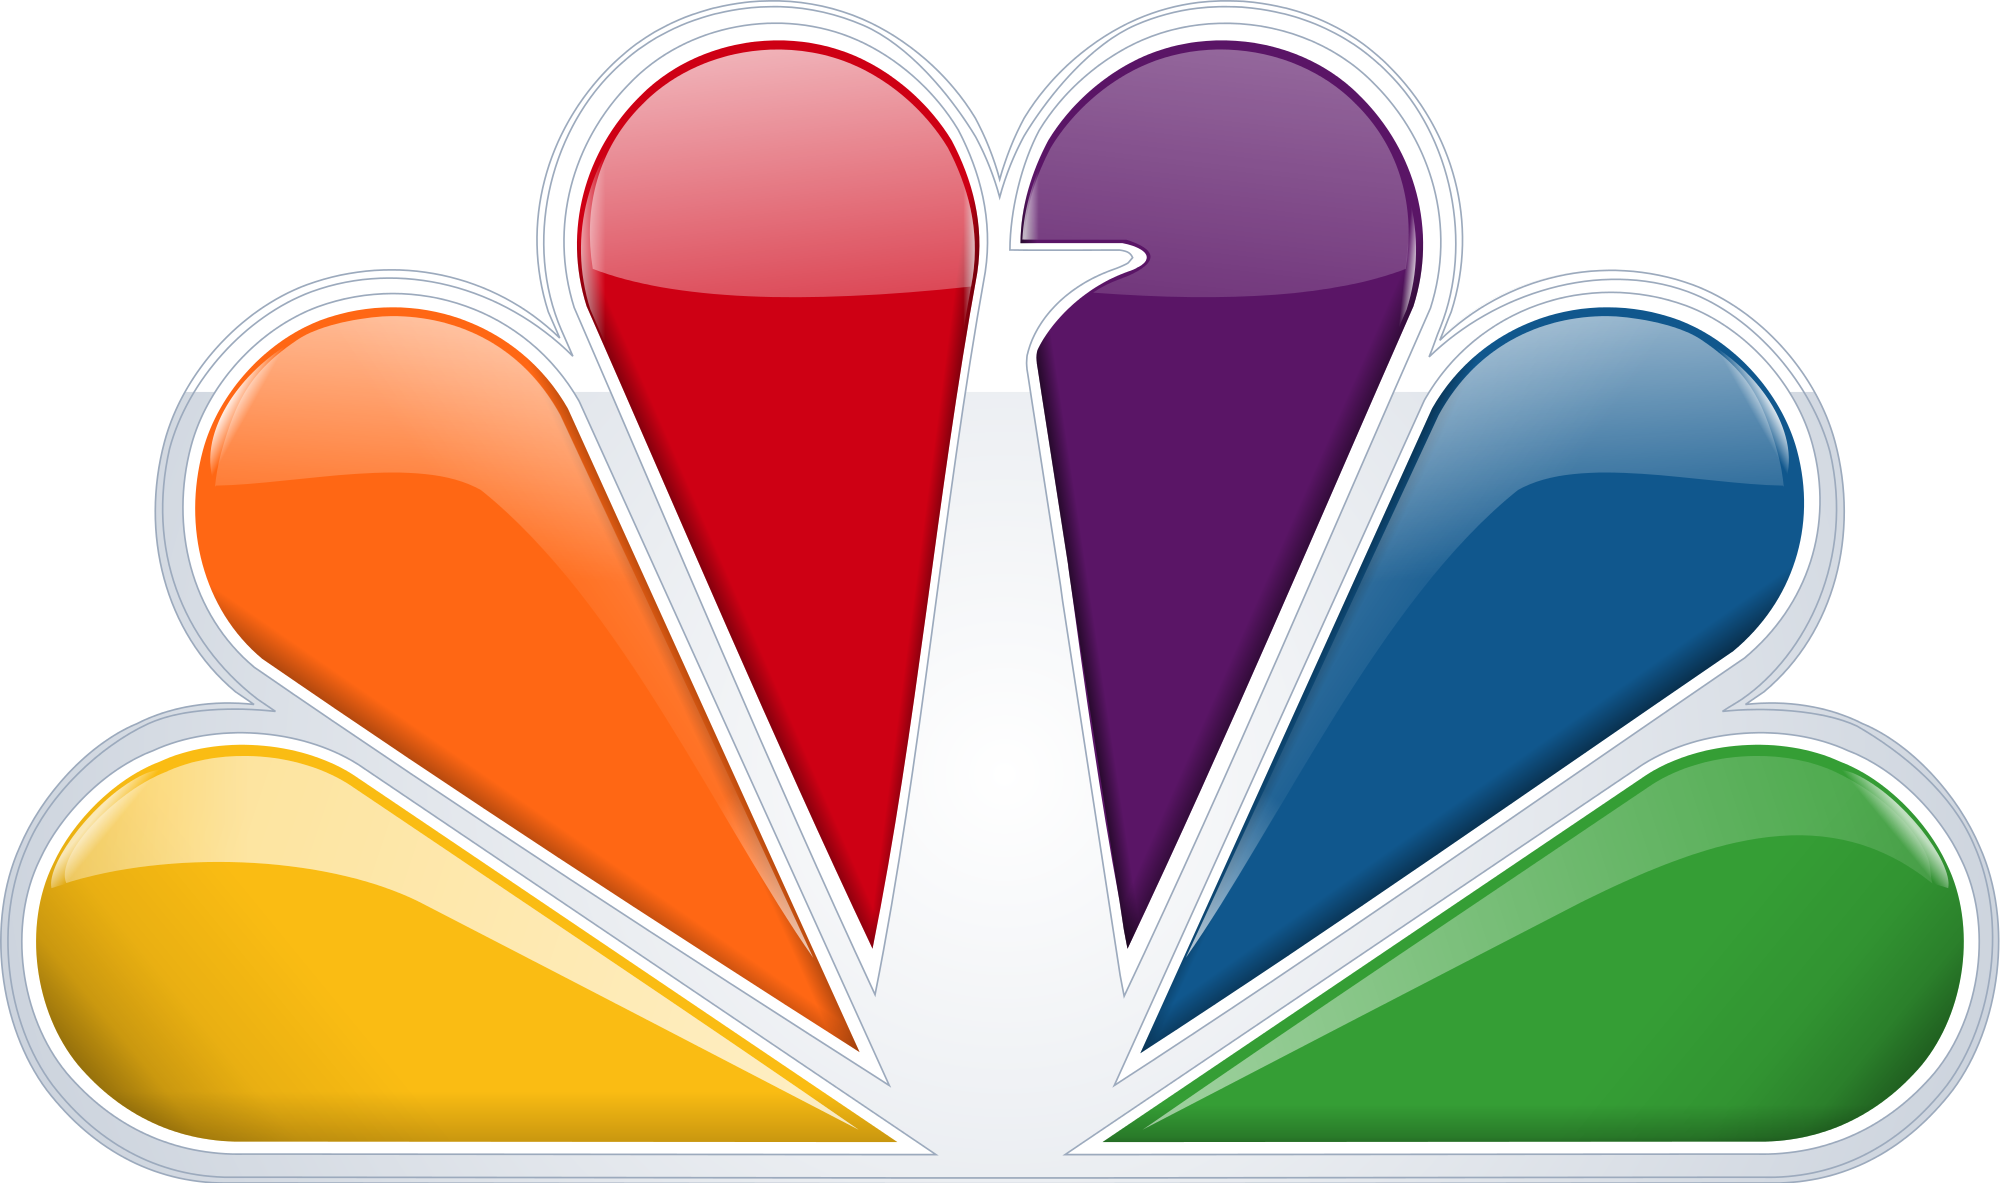 NBC_Peacock_logo_2013.svg.png